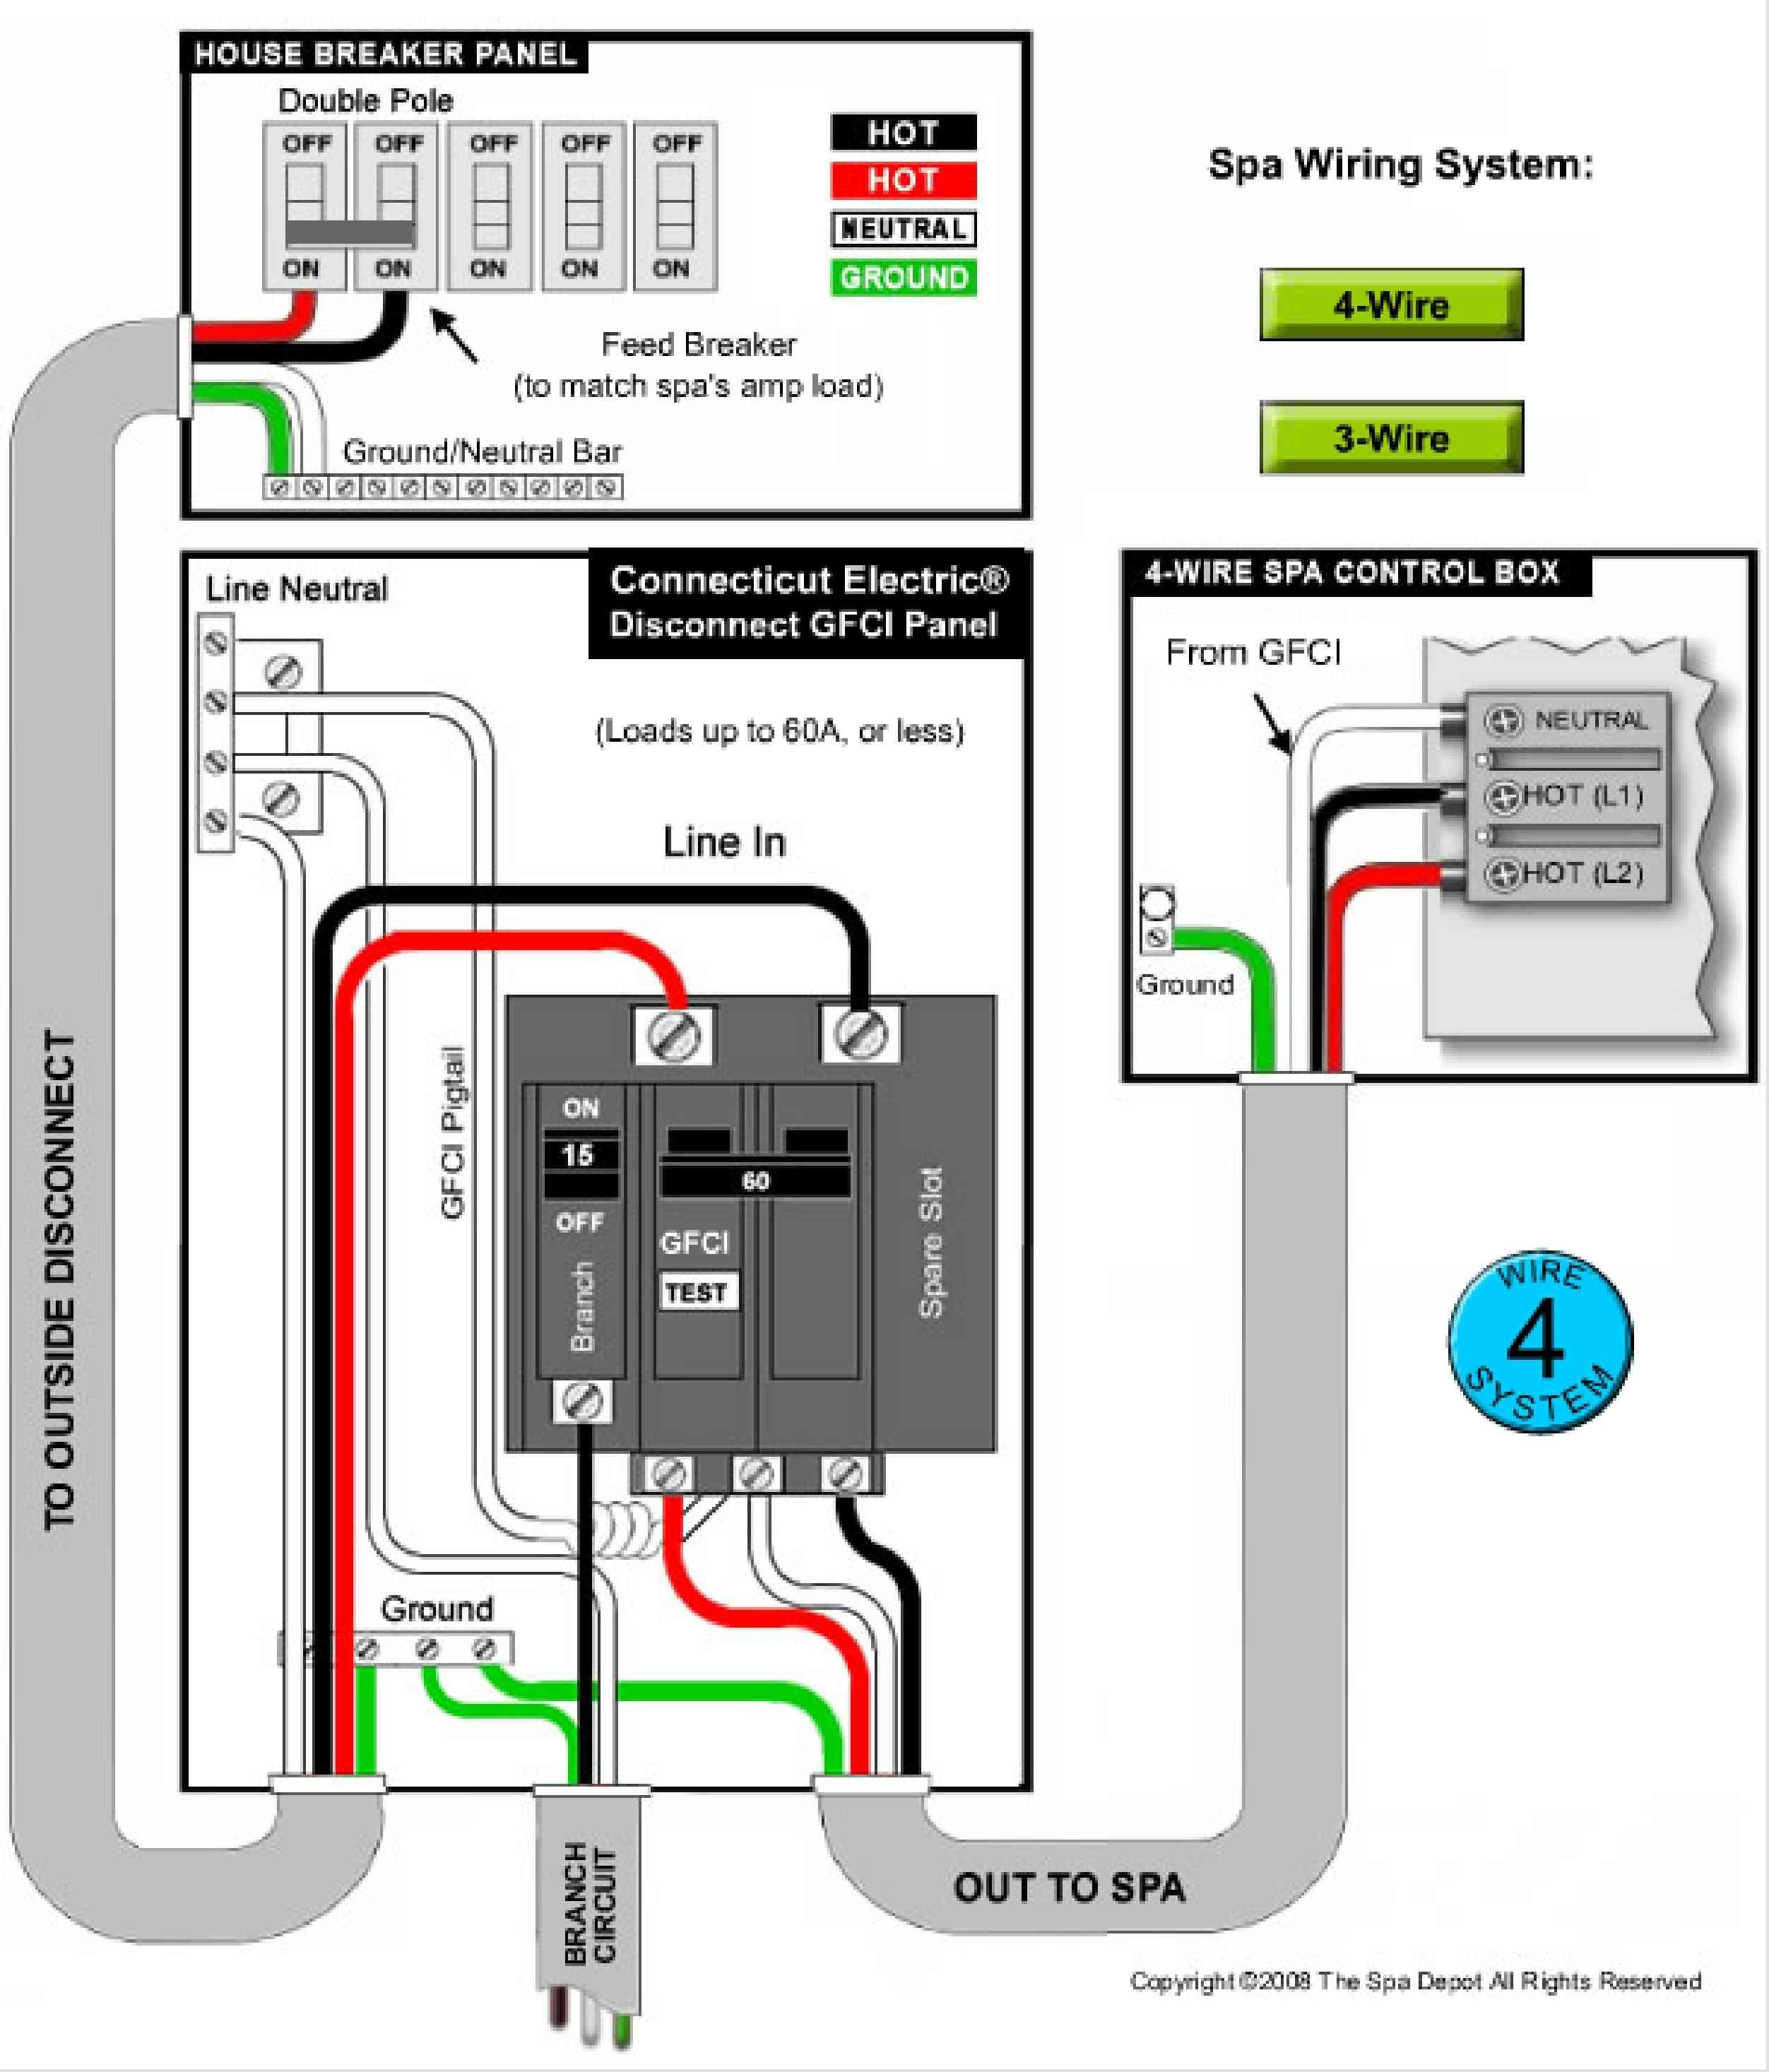 Hot Tub Wiring Diagram Free Downloads Square D Hot Tub Gfci Breaker Wiring Diagram Download